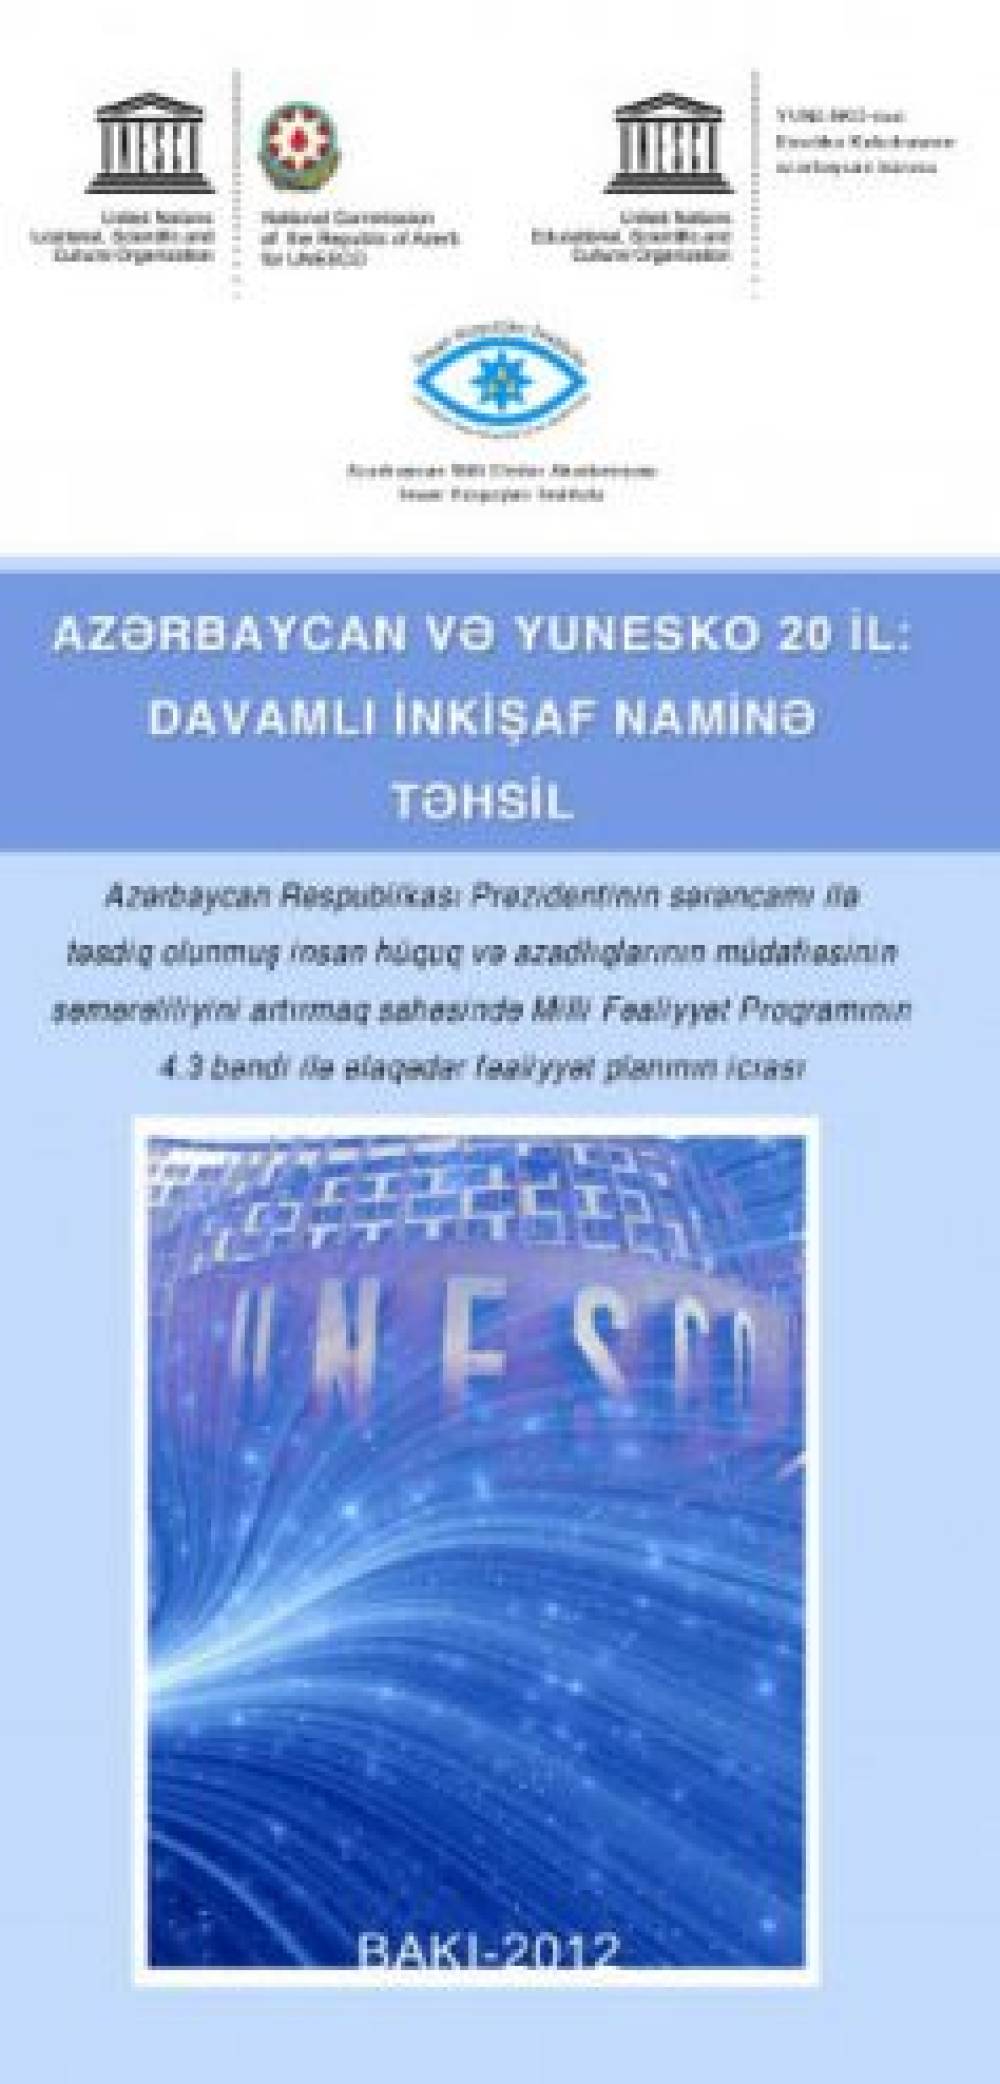 Azerbaijan and unesco – 20 years: study for the sake of sustainable development